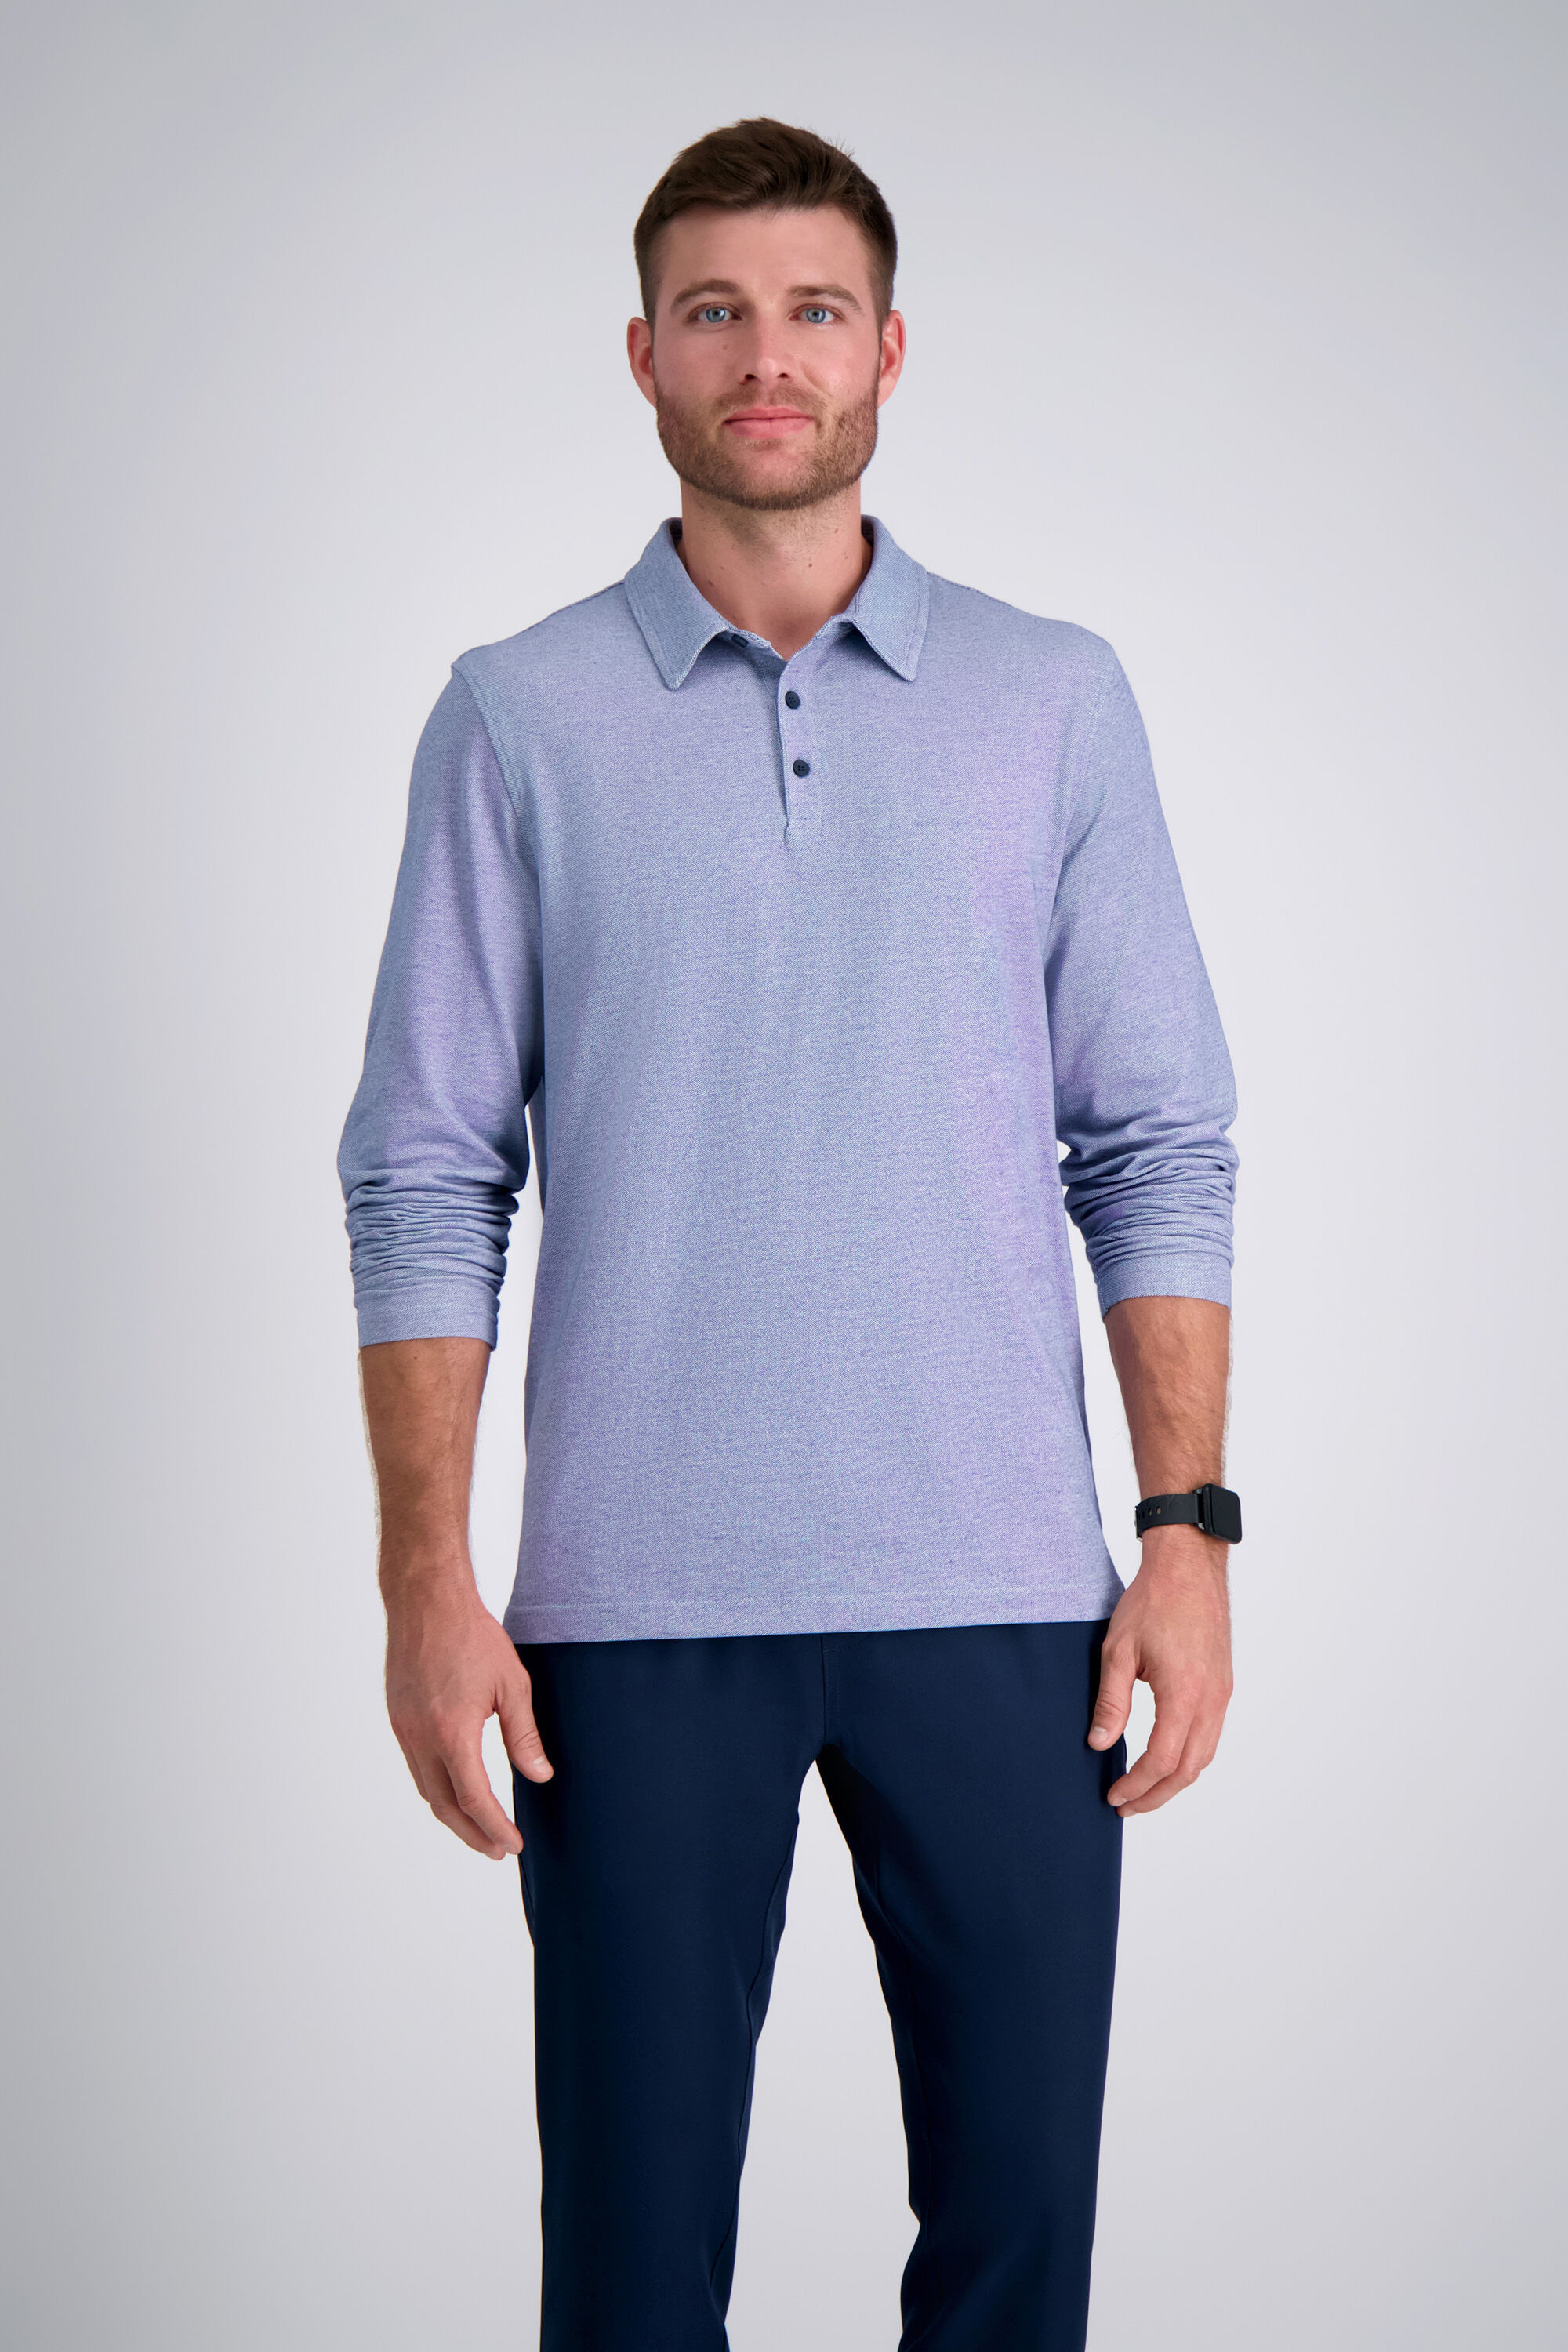 Polo Shirts for Men - Golf Shirts for Men | Haggar